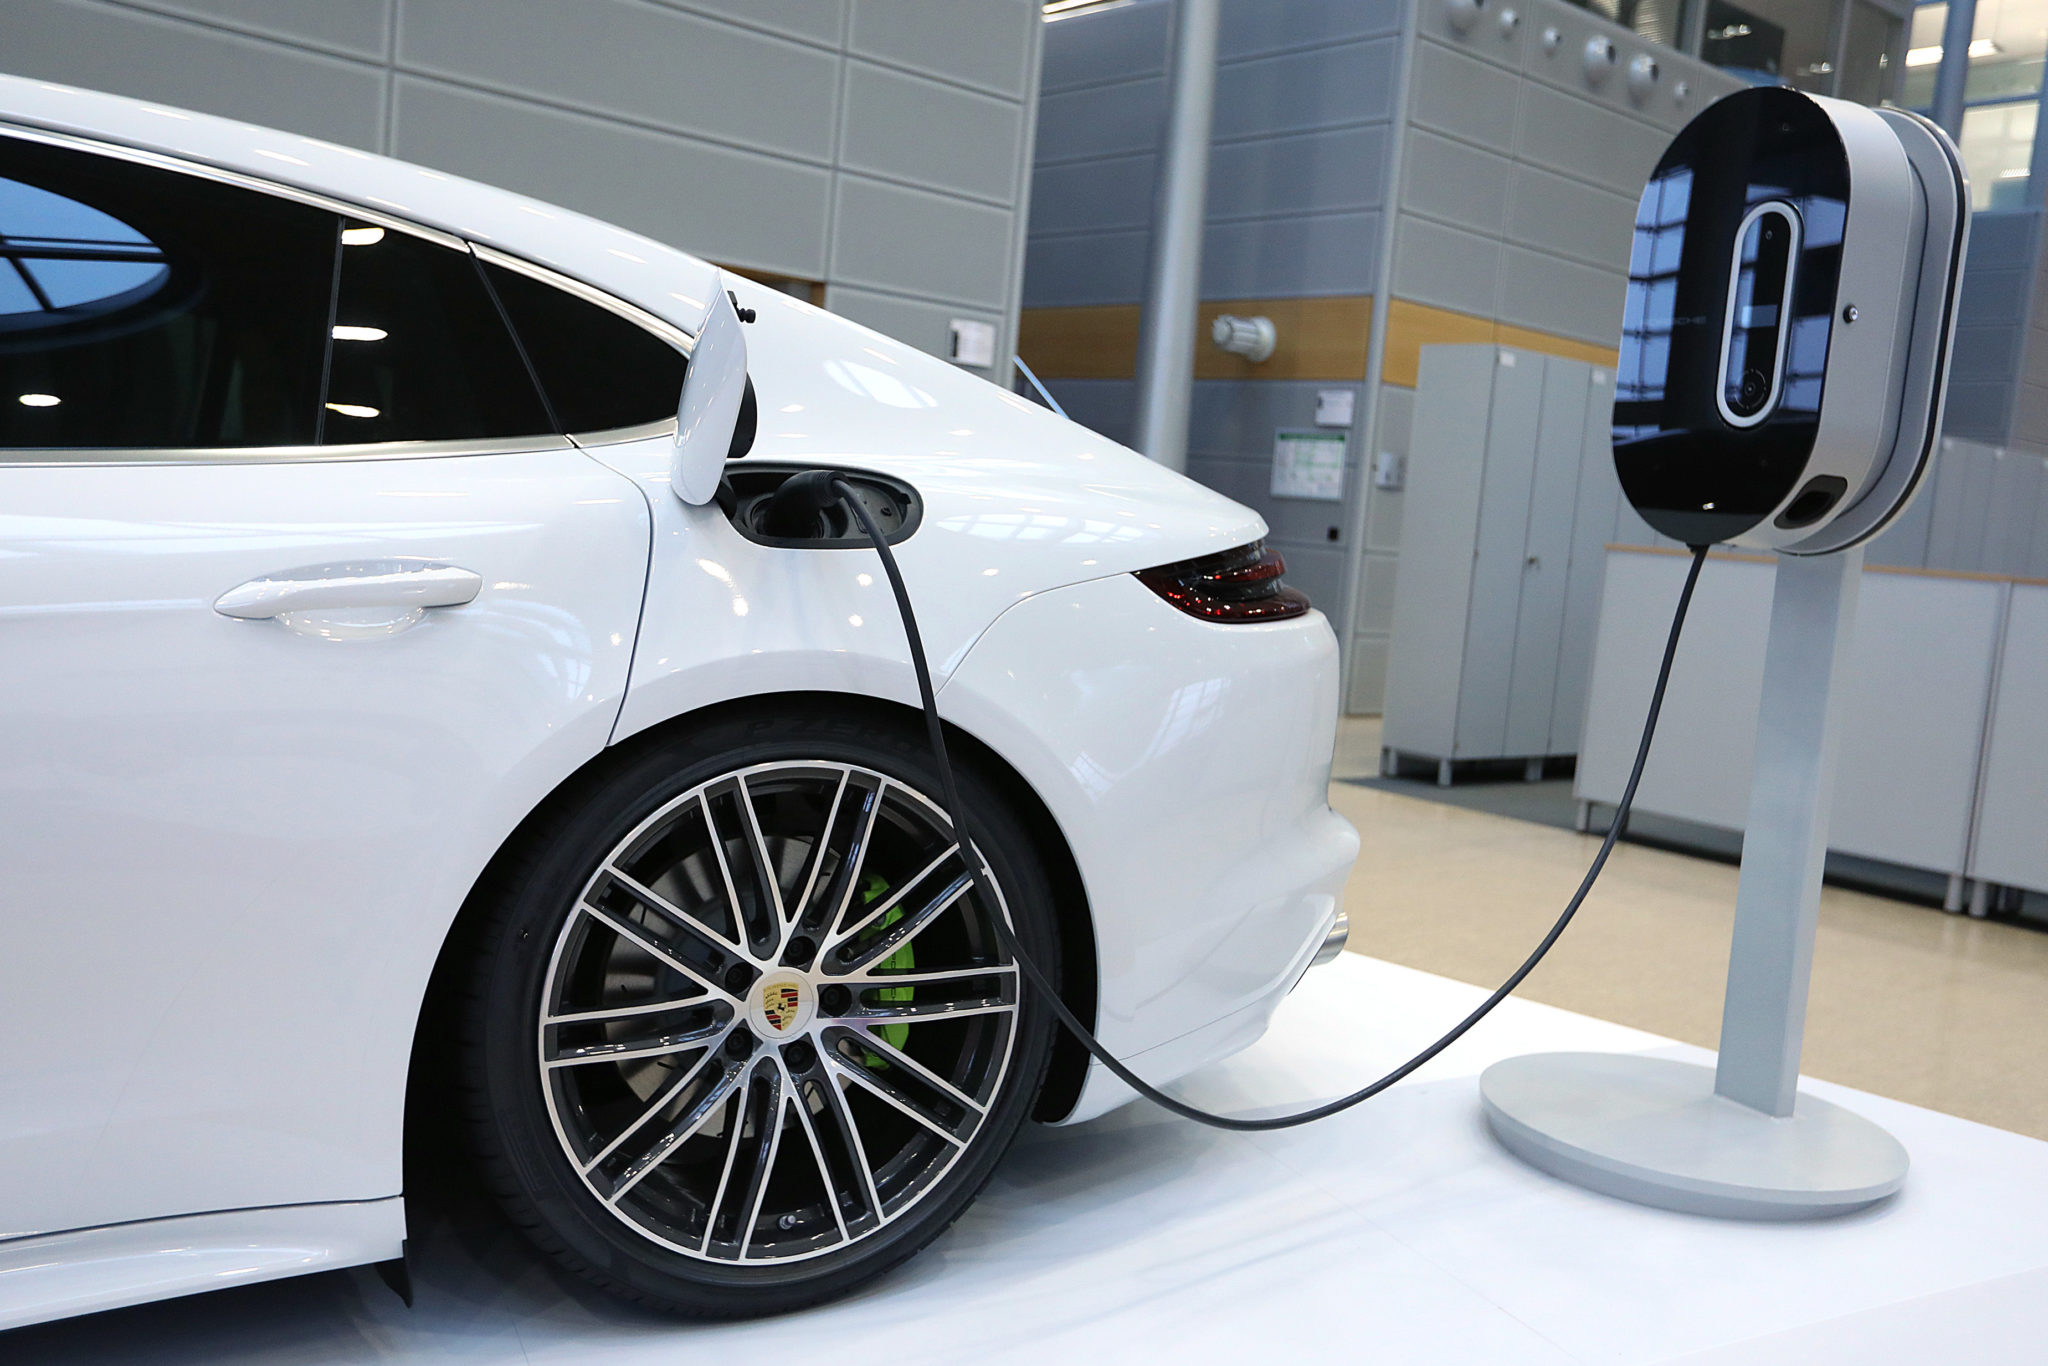 Macan SUV Production As Porsche AG Plans For $6.8 Billion Profit By 2025